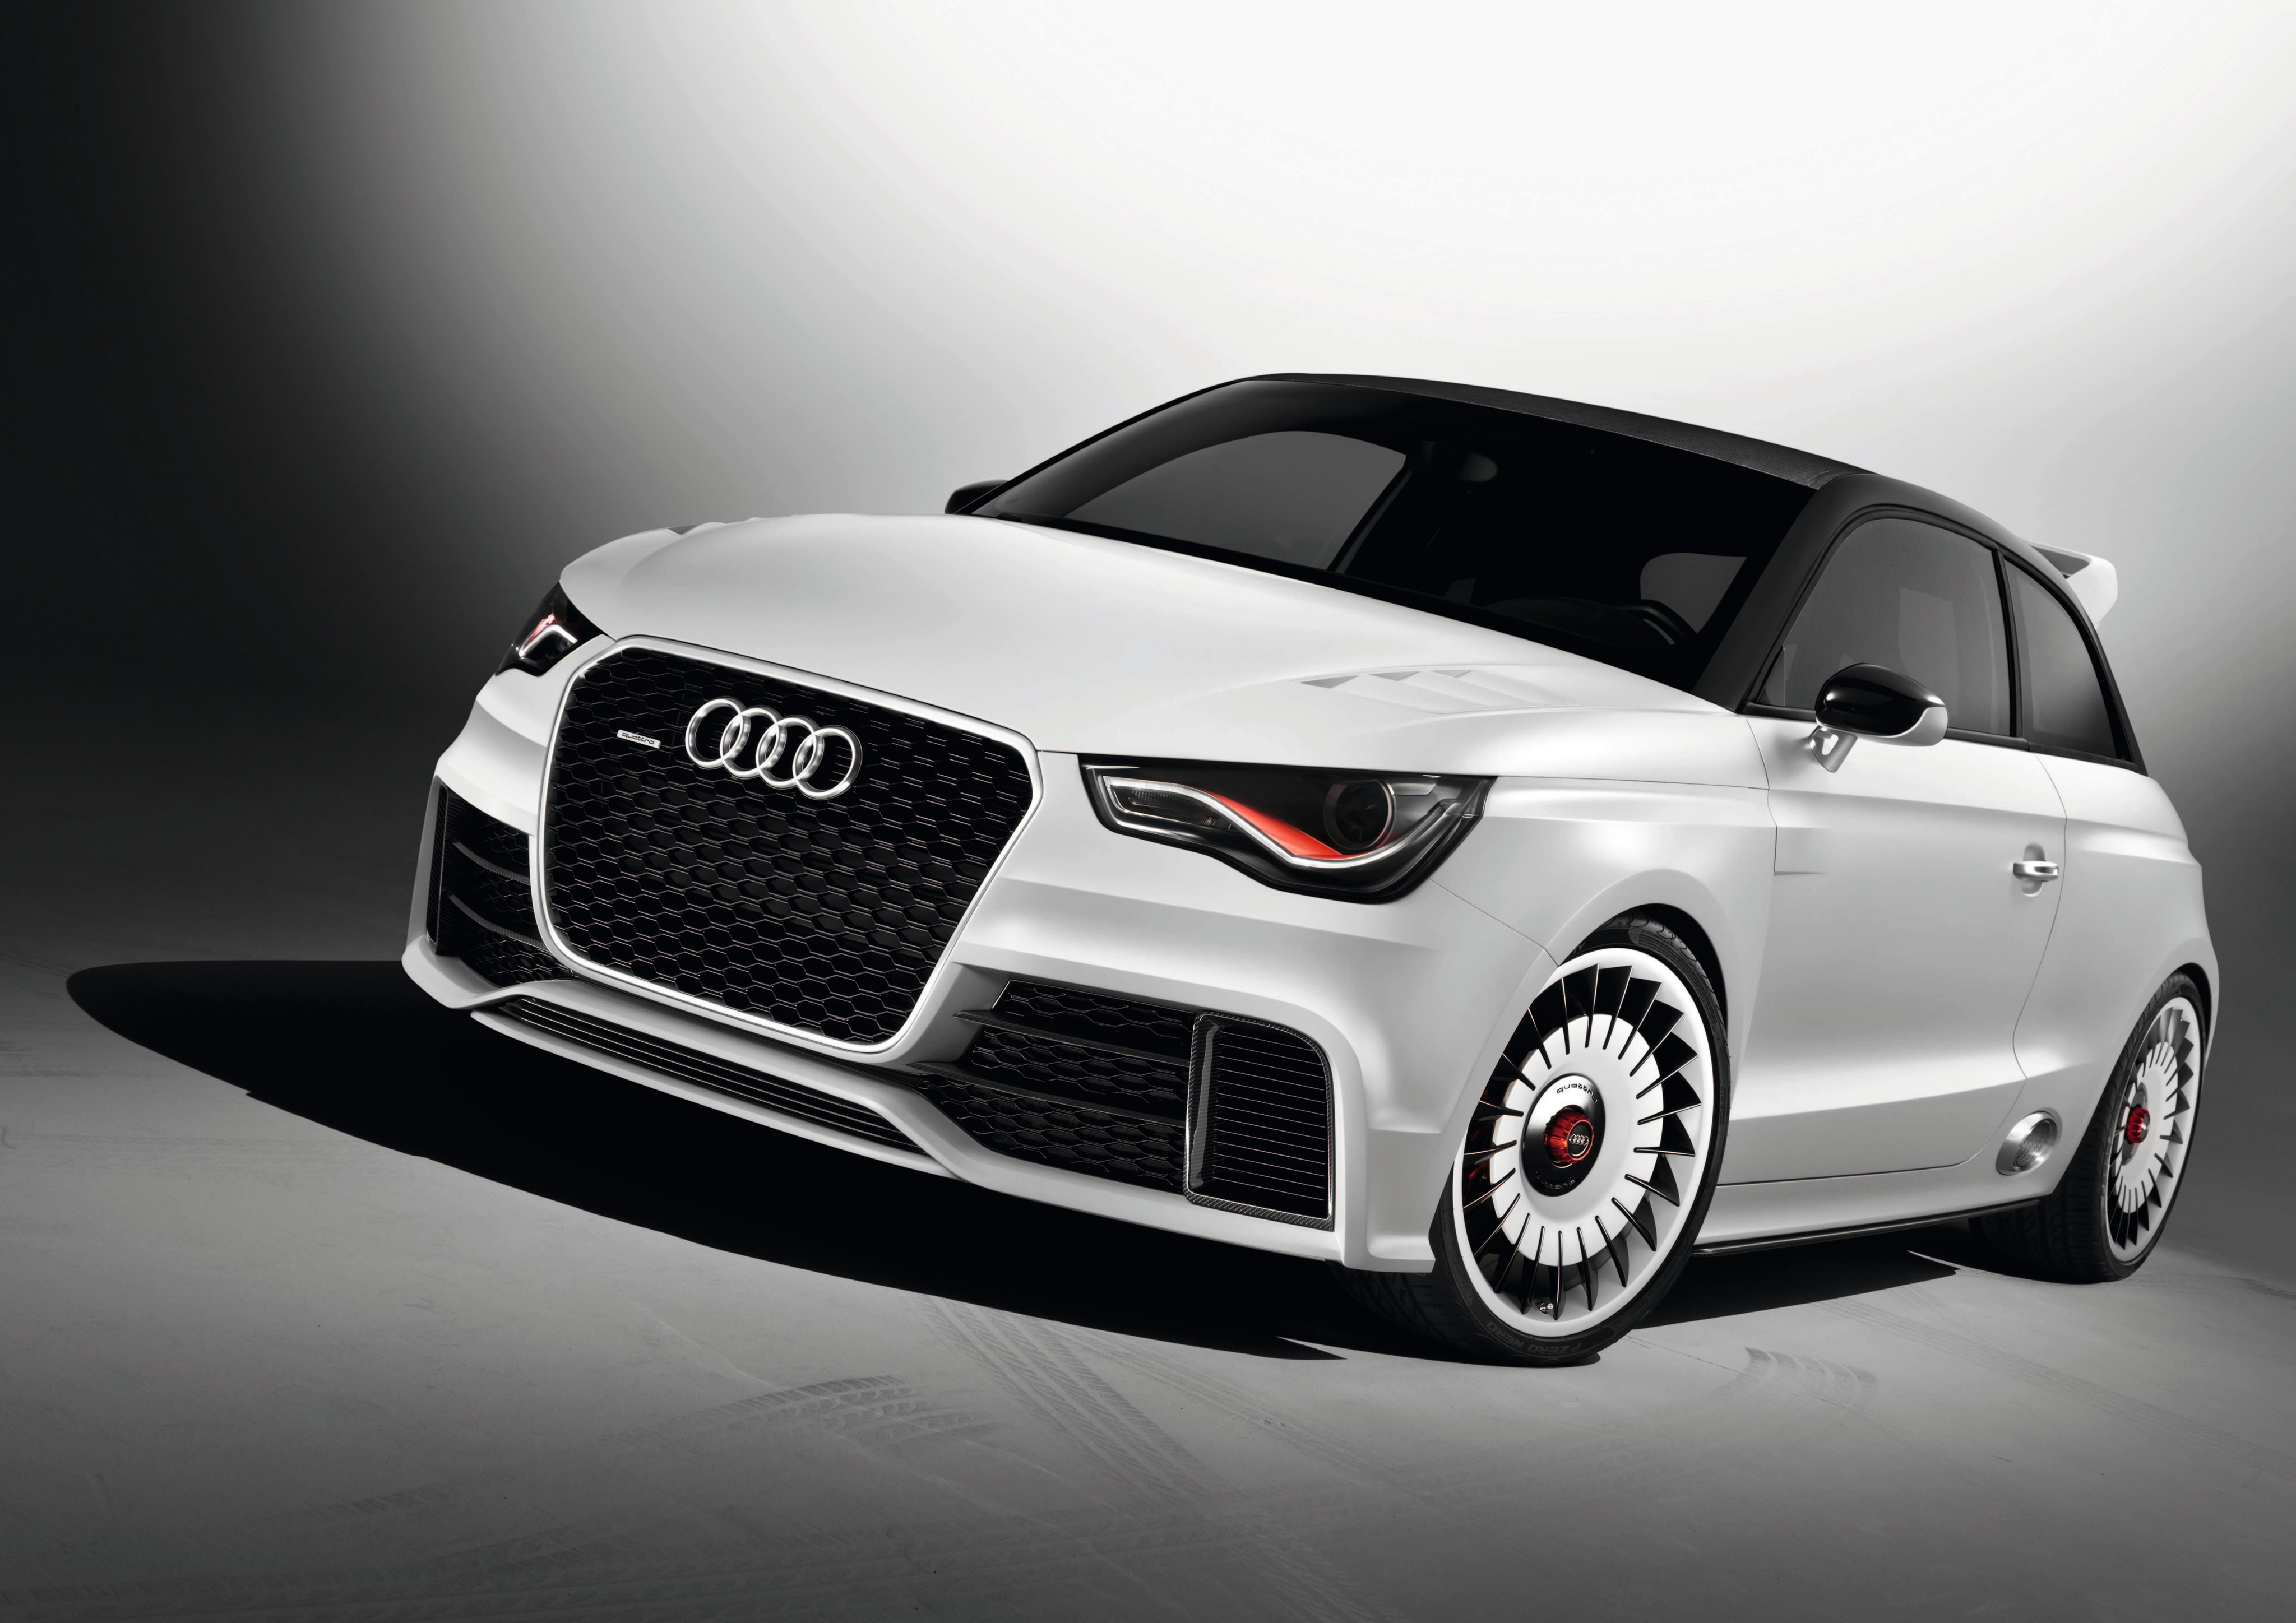 Audi A1 4k Ultra HD Wallpaper Background Image Id